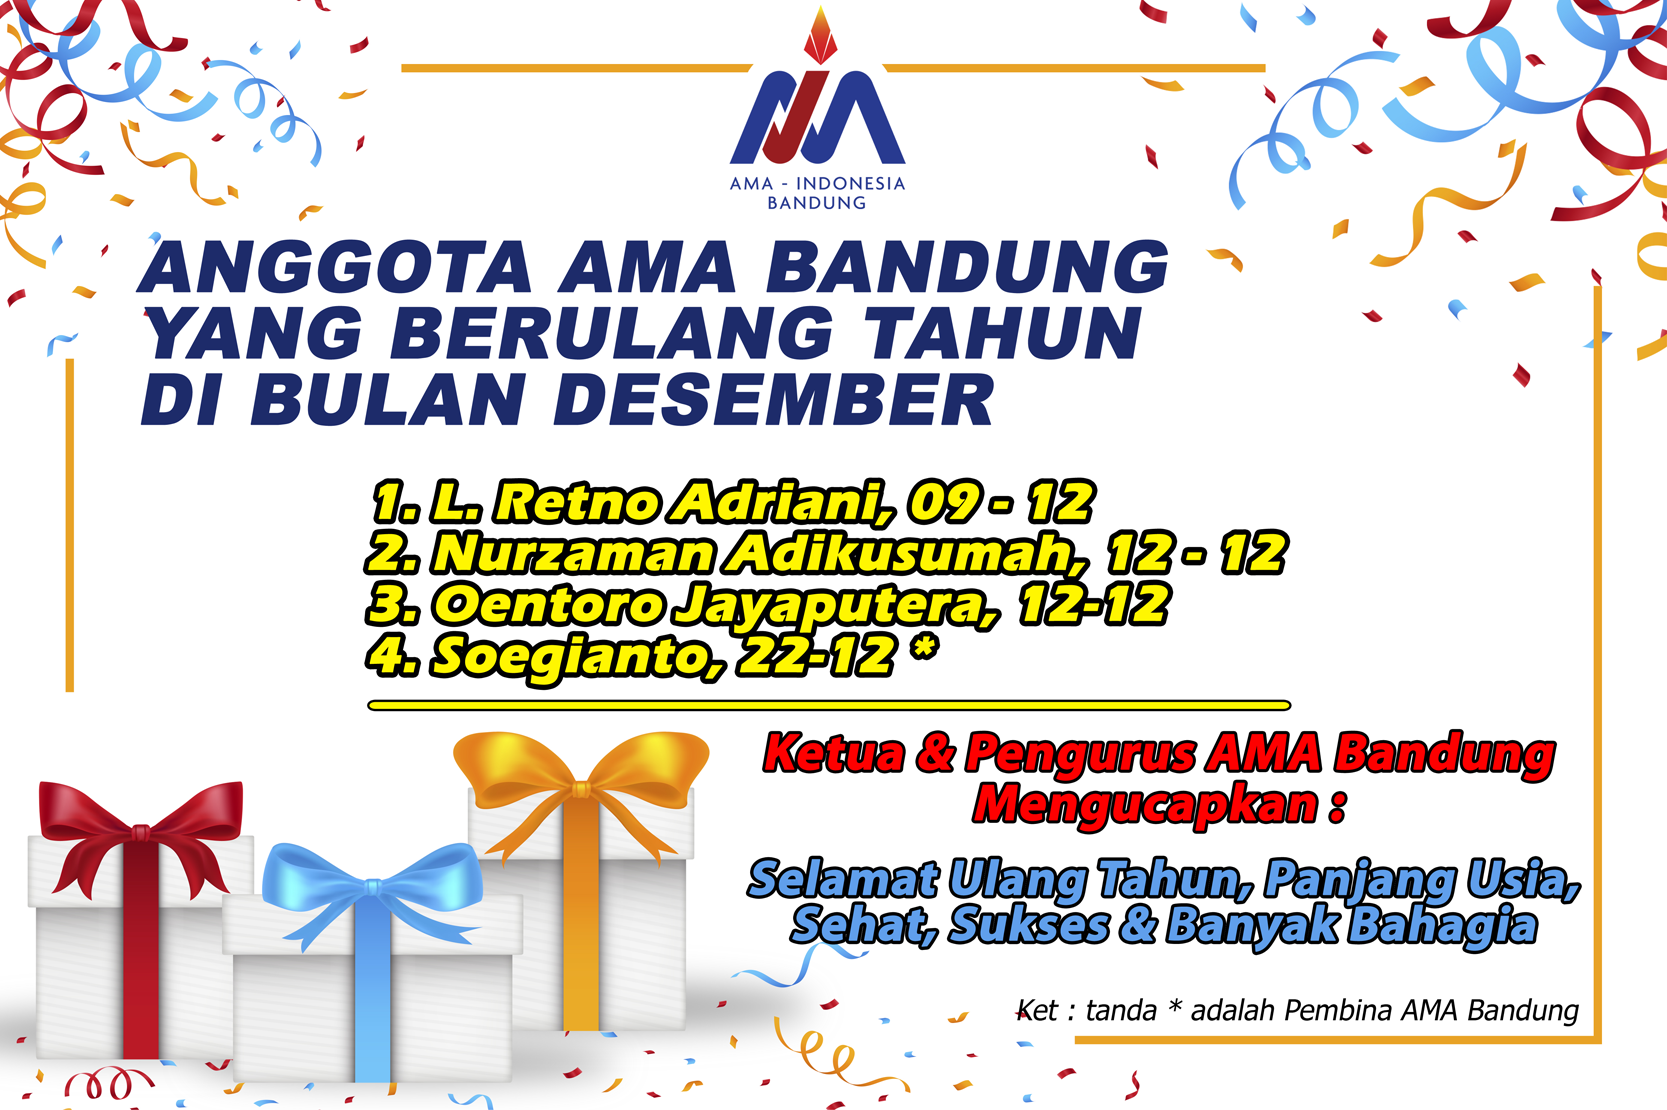 Anggota AMA Bandung yang Berulang tahun bulan Desember